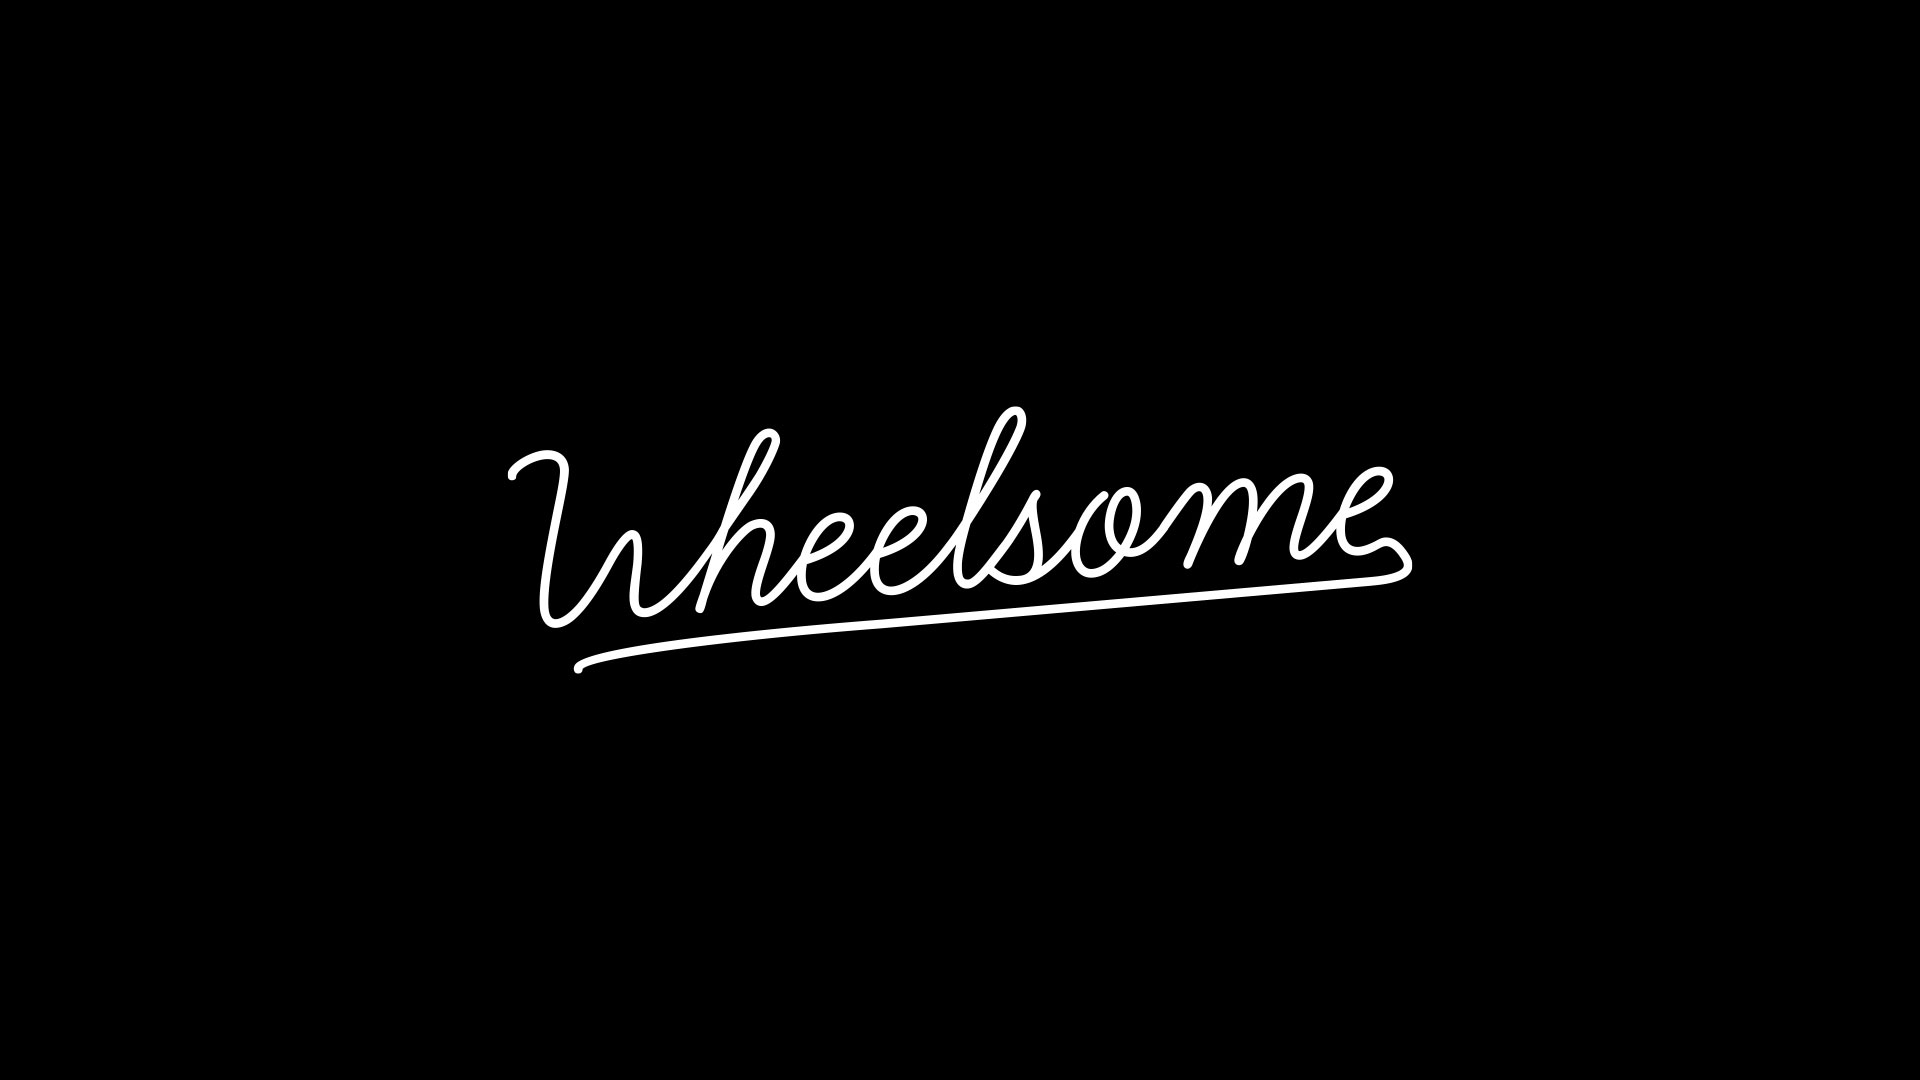 Wheelsome logo